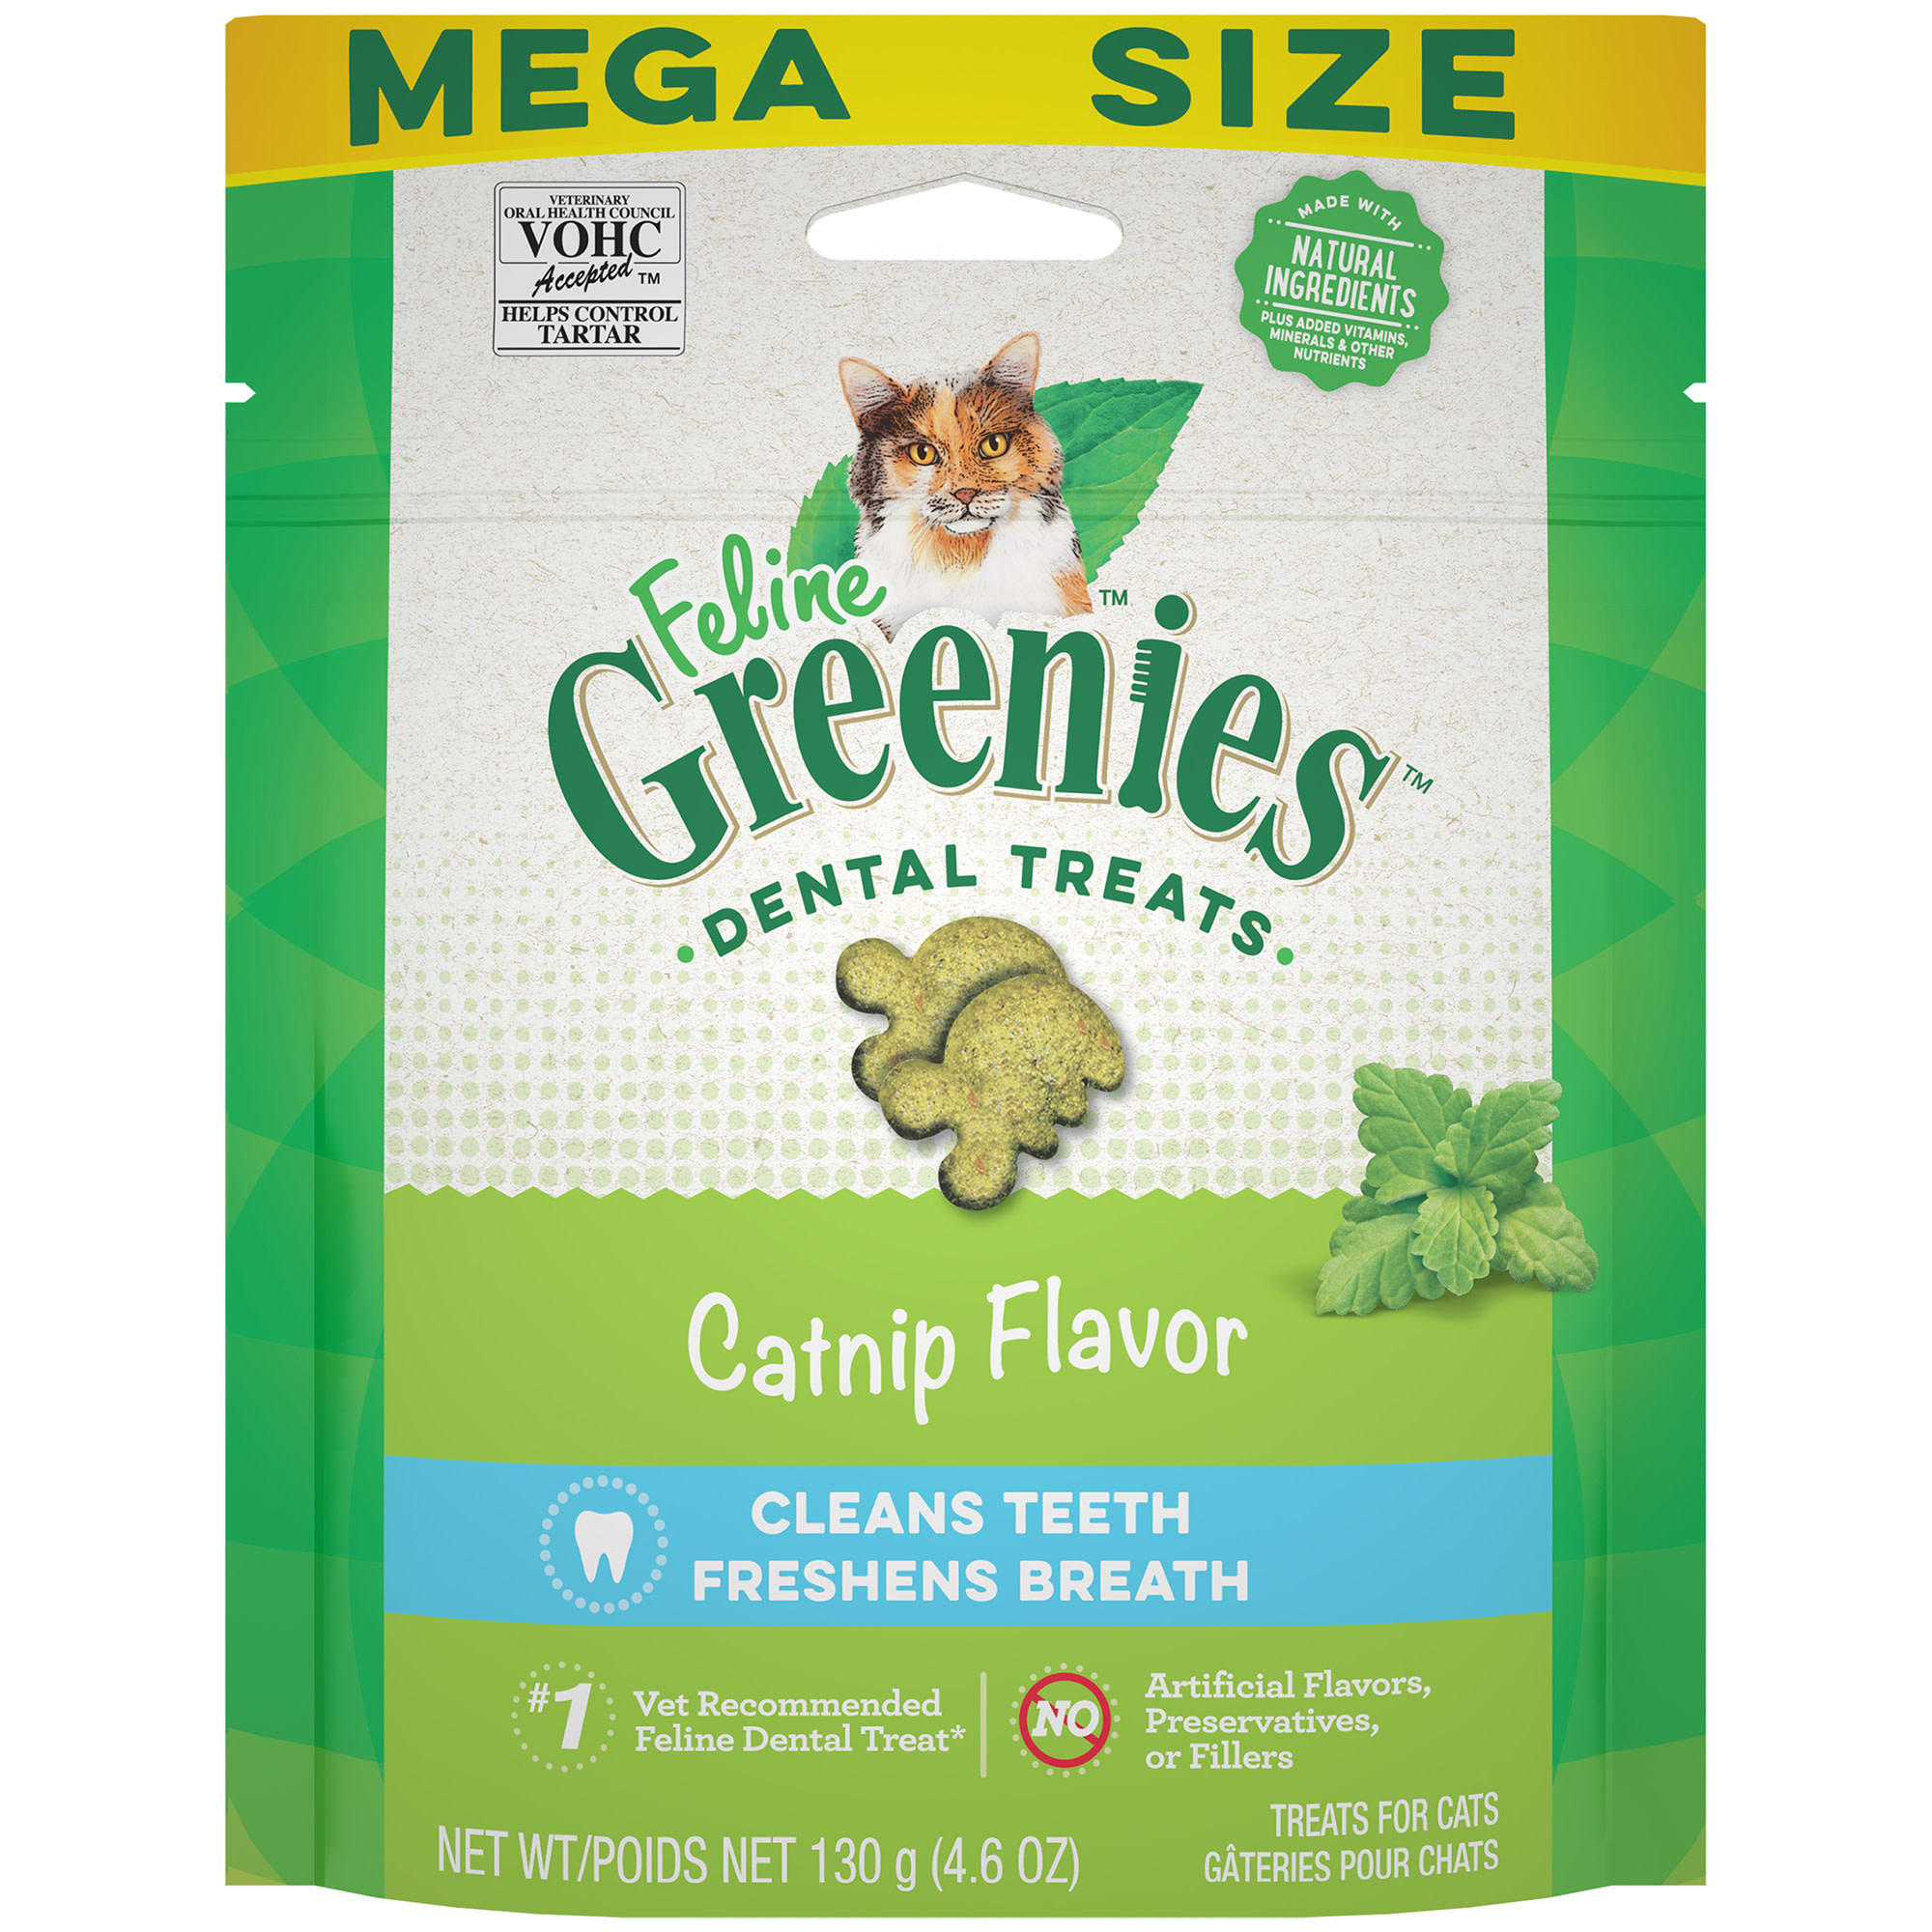 Feline Greenies Catnip Flavor Adult Dental Cat Treats, 4.6 oz. Petco